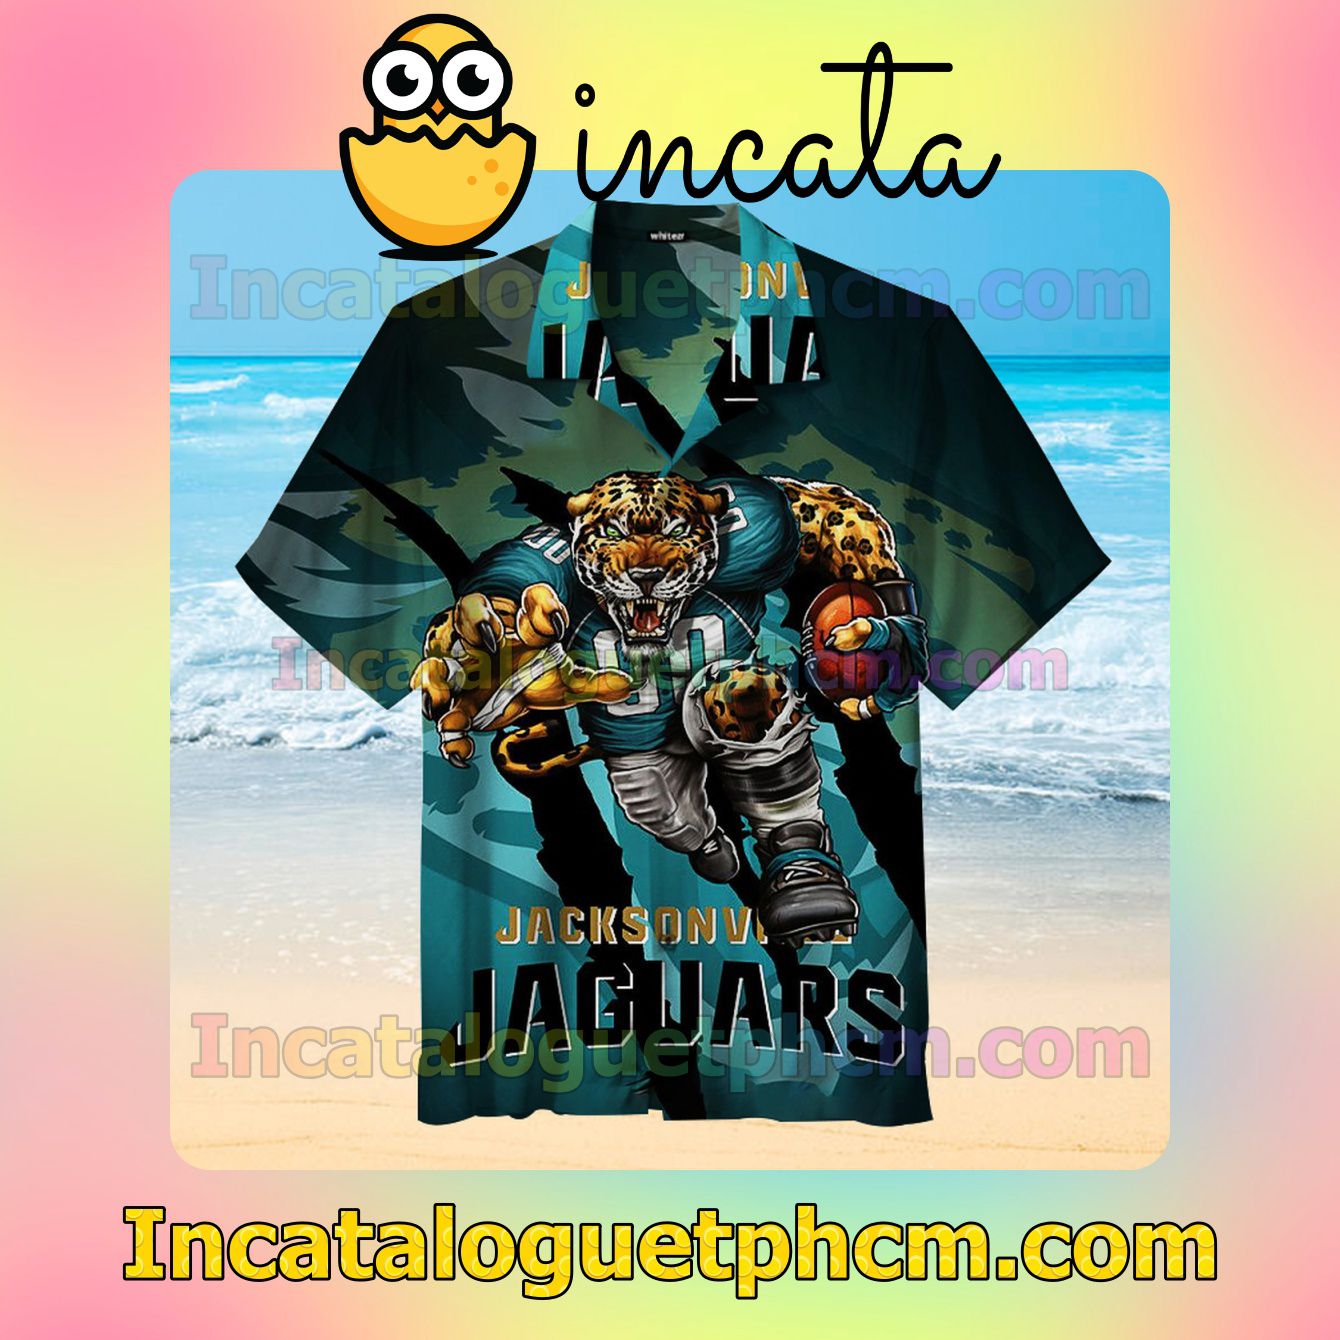 Jacksonville Jaguars Tiger Player Teal Vacation Shirt